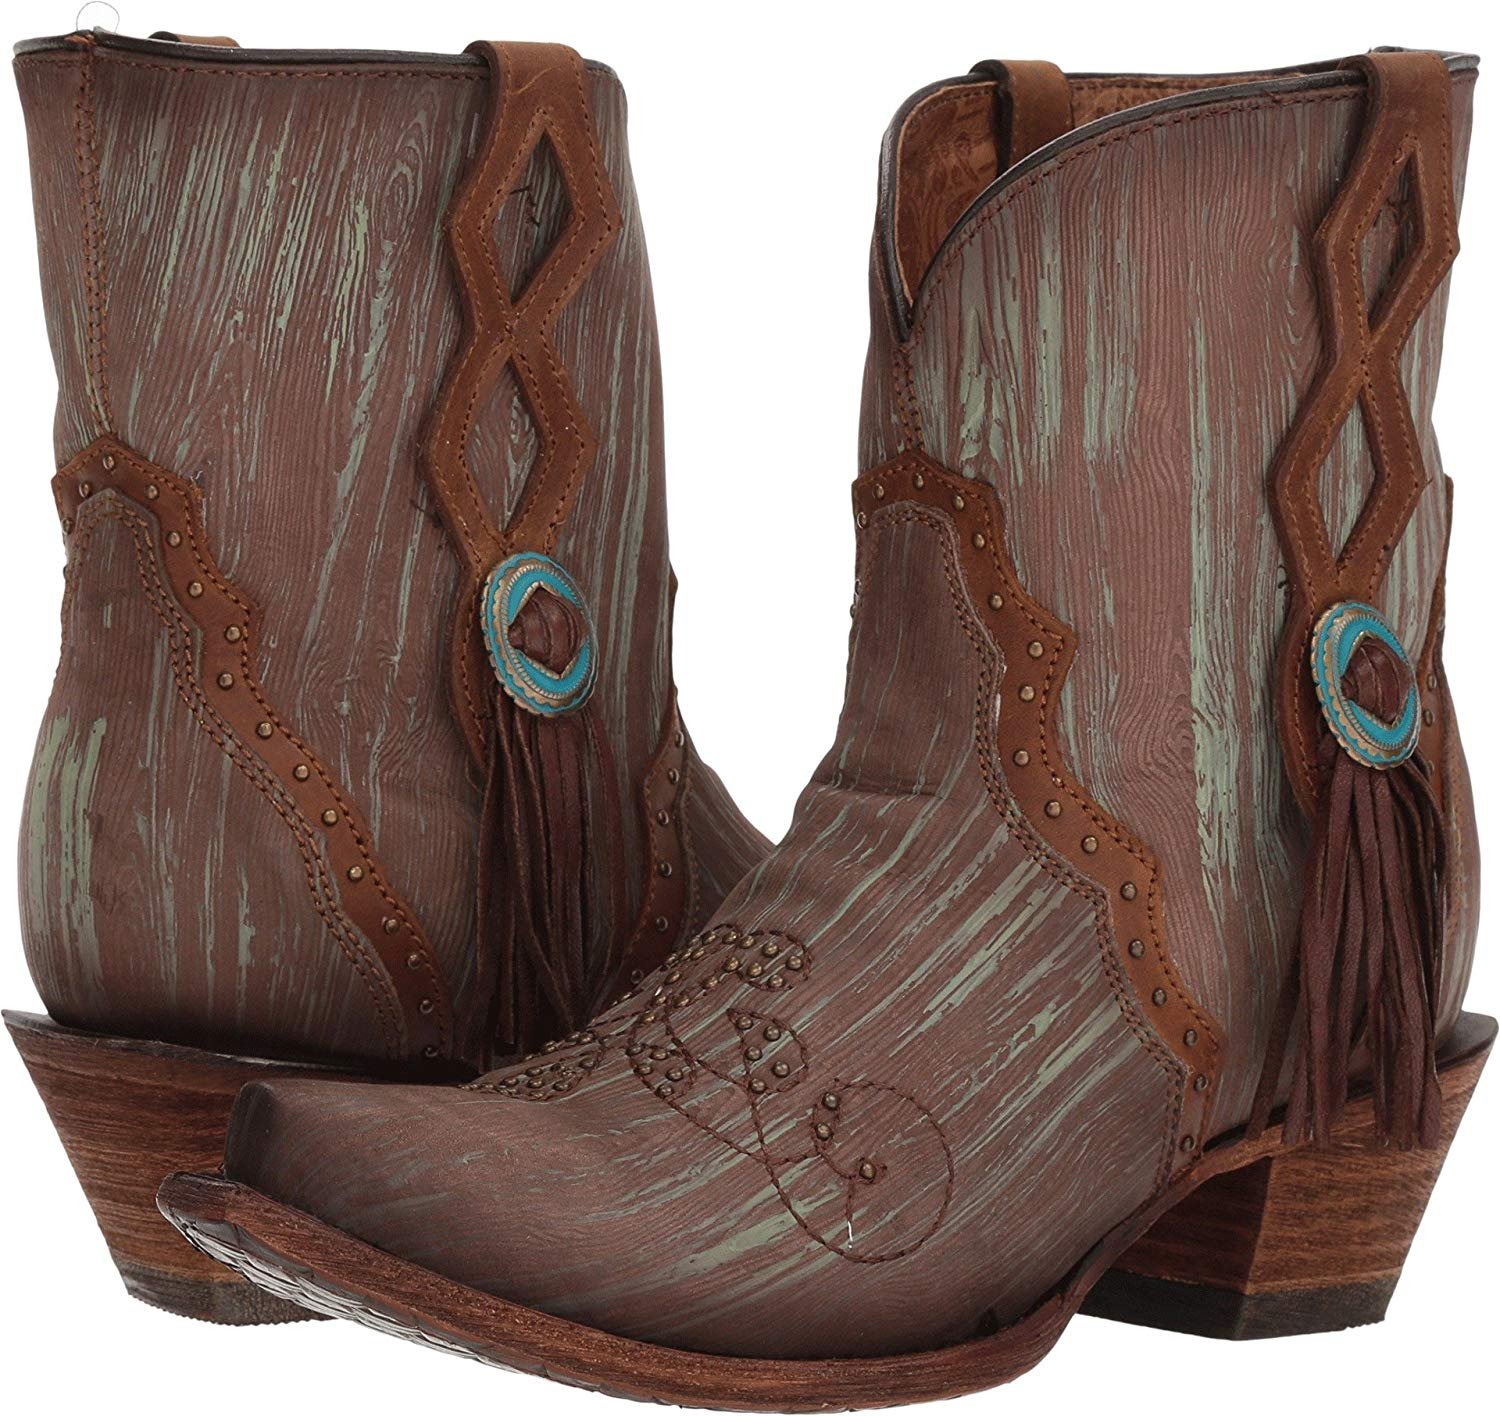 Corral Boots Womens C3292 | eBay